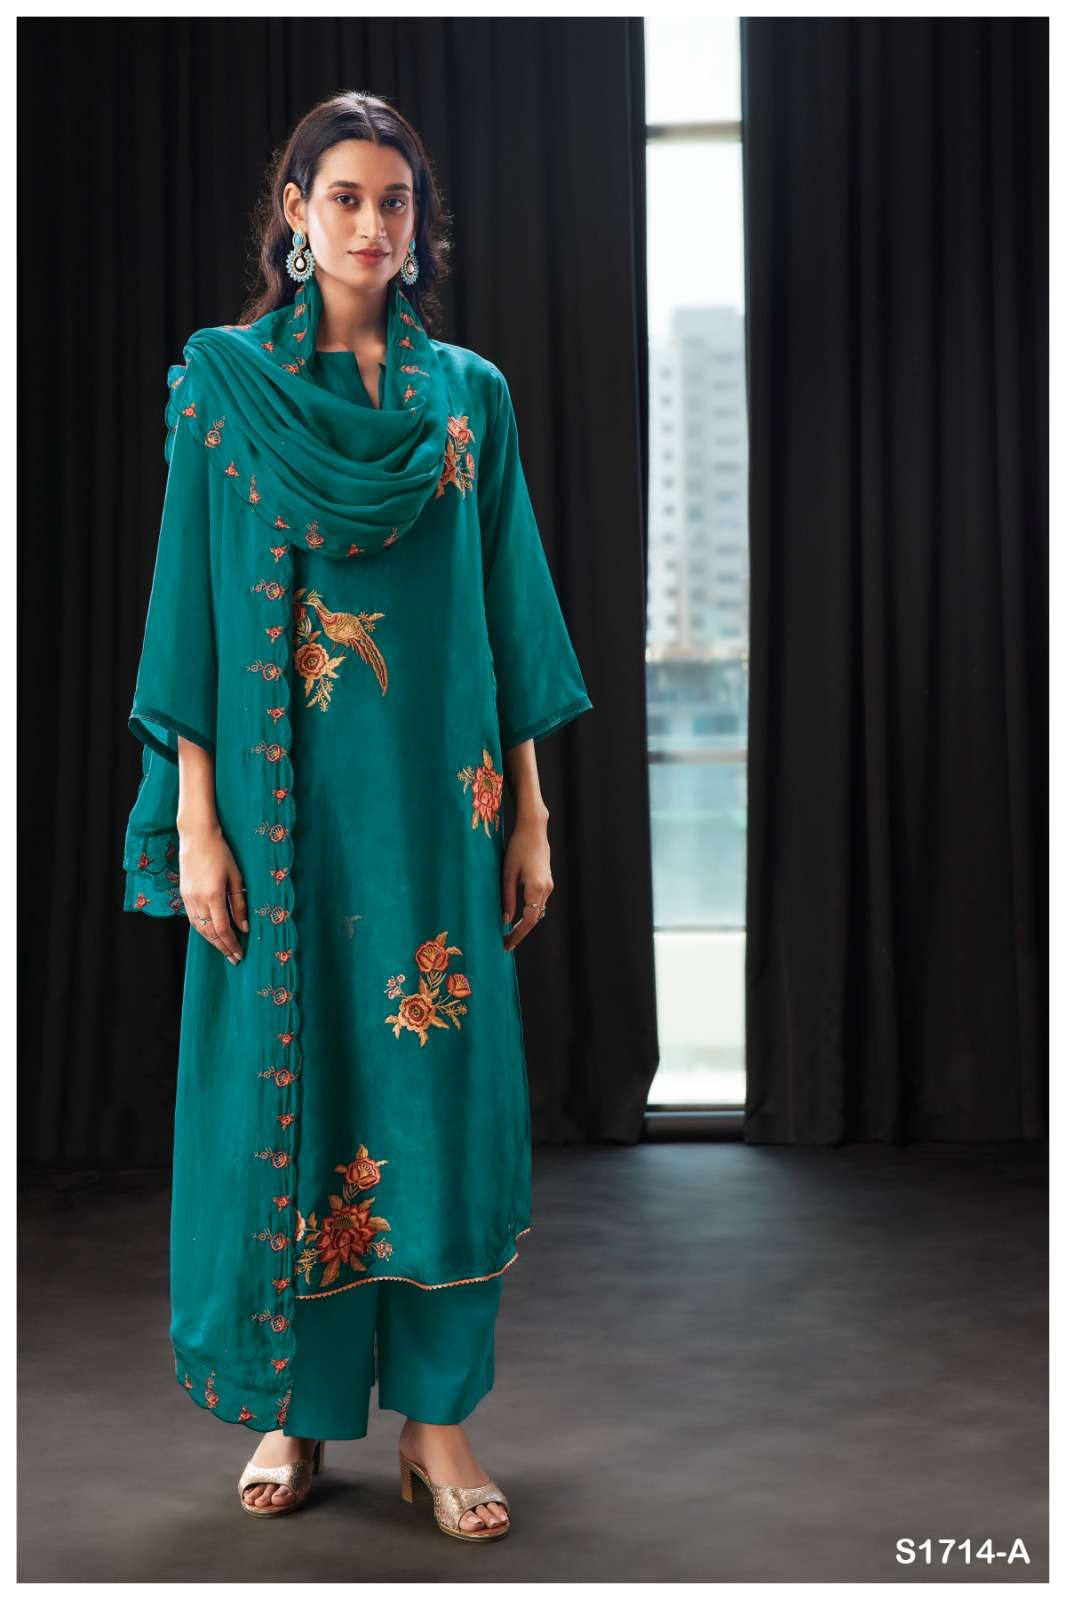 ganga odilia 1714 series trendy designer salwar kameez catalogue collection 2023